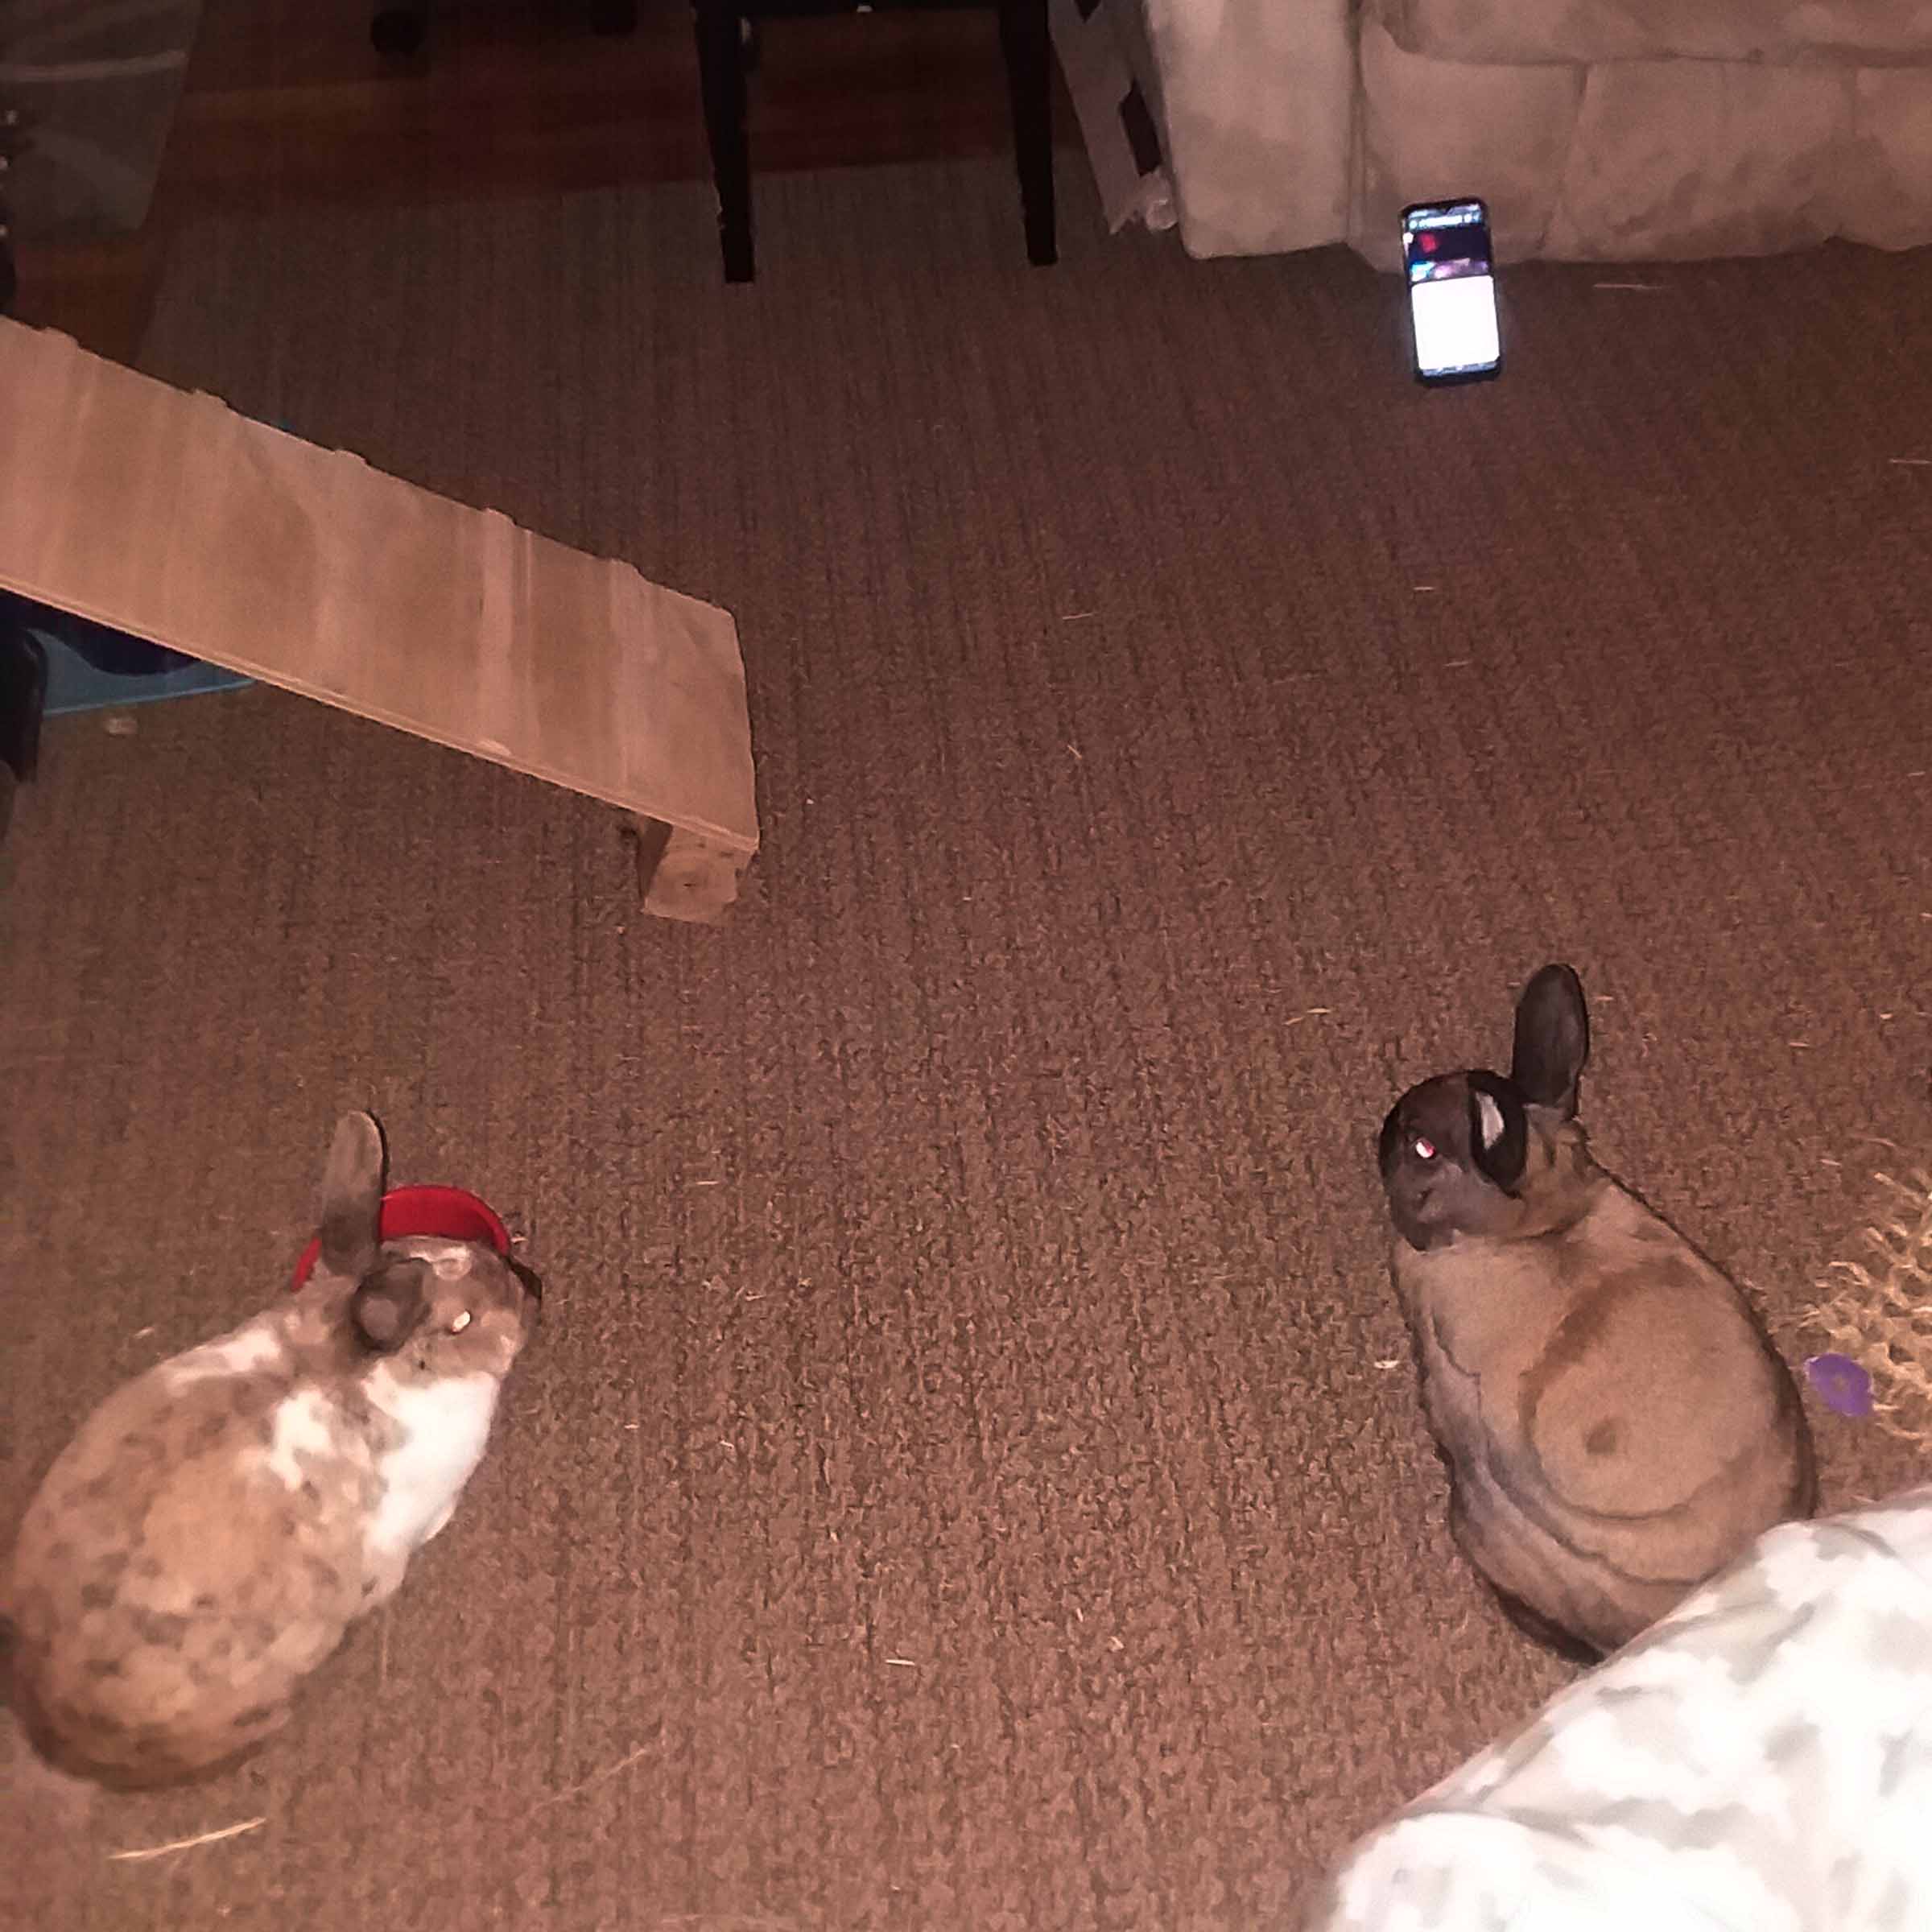 Goober and Raisinet share Abigail's ritual of listening to "1000 Ears" every night on their bun mom's phone.